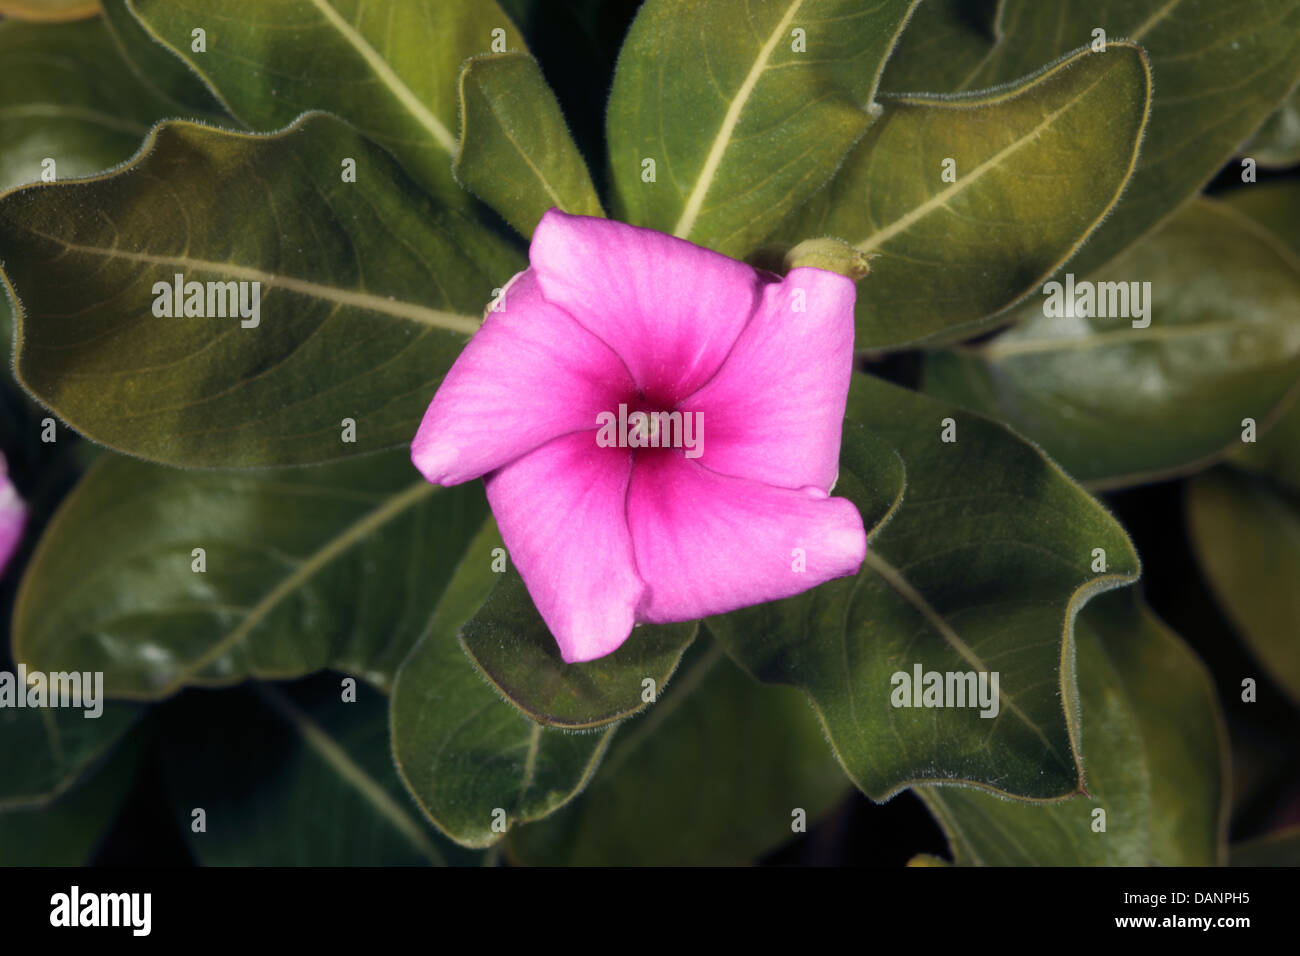 Close-up of the Endangered Madagascar Periwinkle flower- Catharanthus roseus- Family Apocynaceae Stock Photo